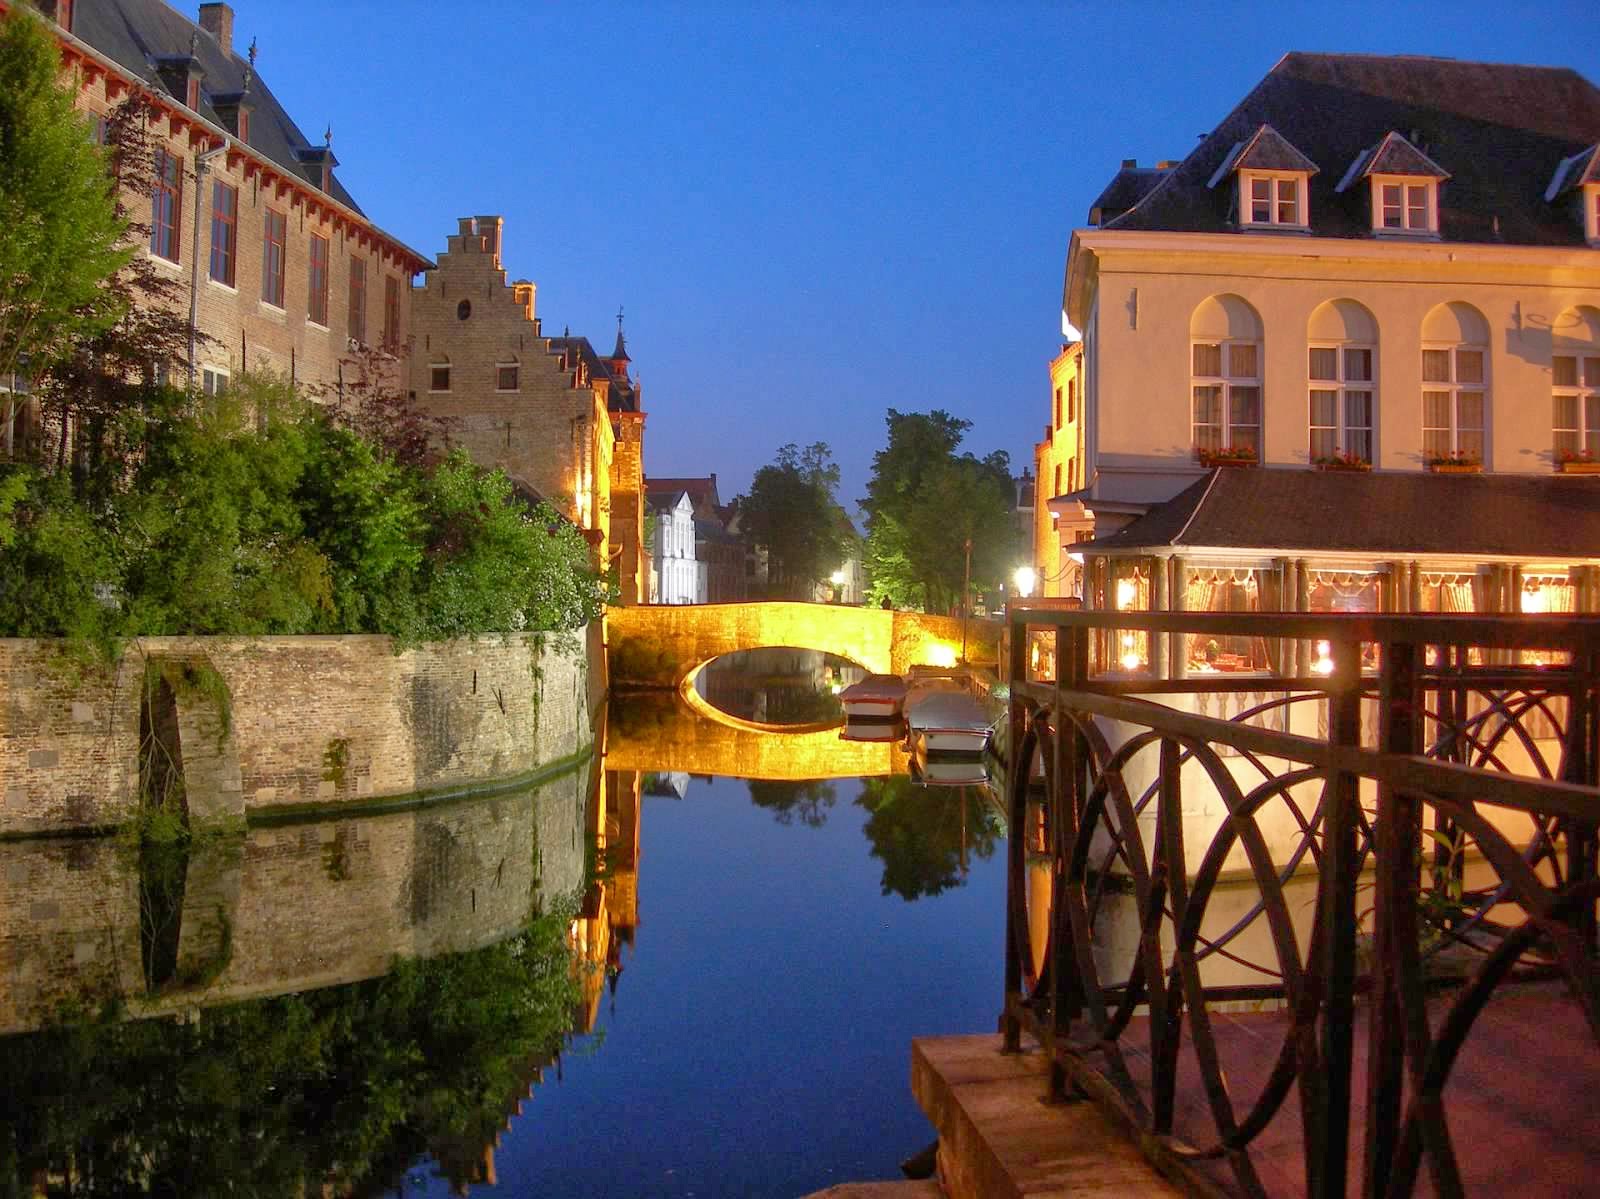 We Three Mothers: Amazing Places - Bruges, Belgium